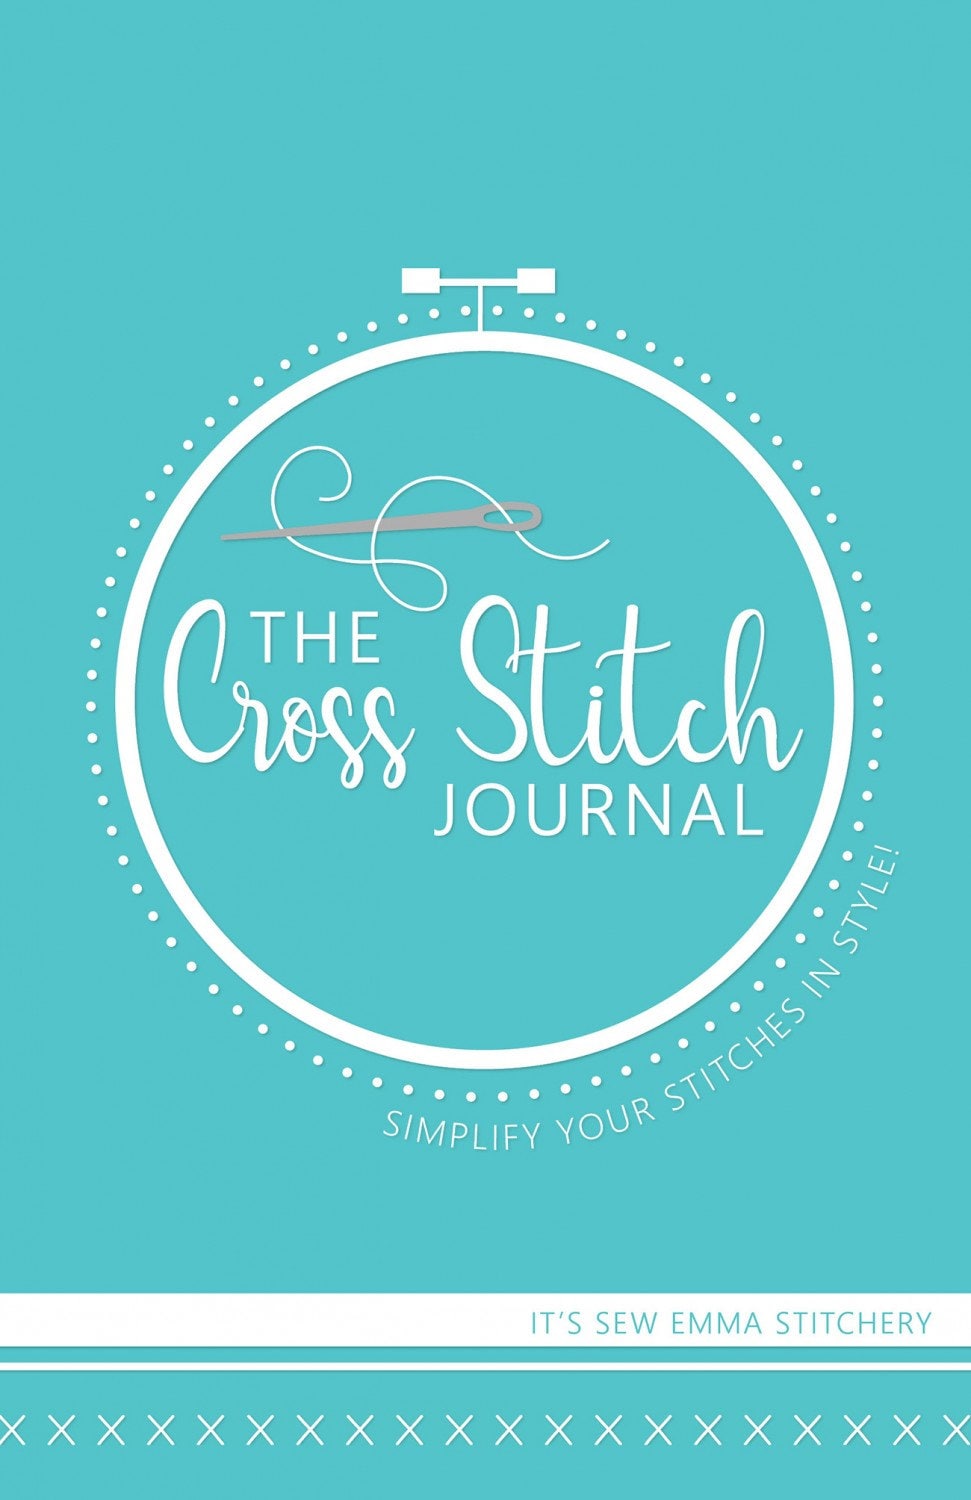 The Cross Stitch Journal by It's Sew Emma Stitchery Stitch It Up VA